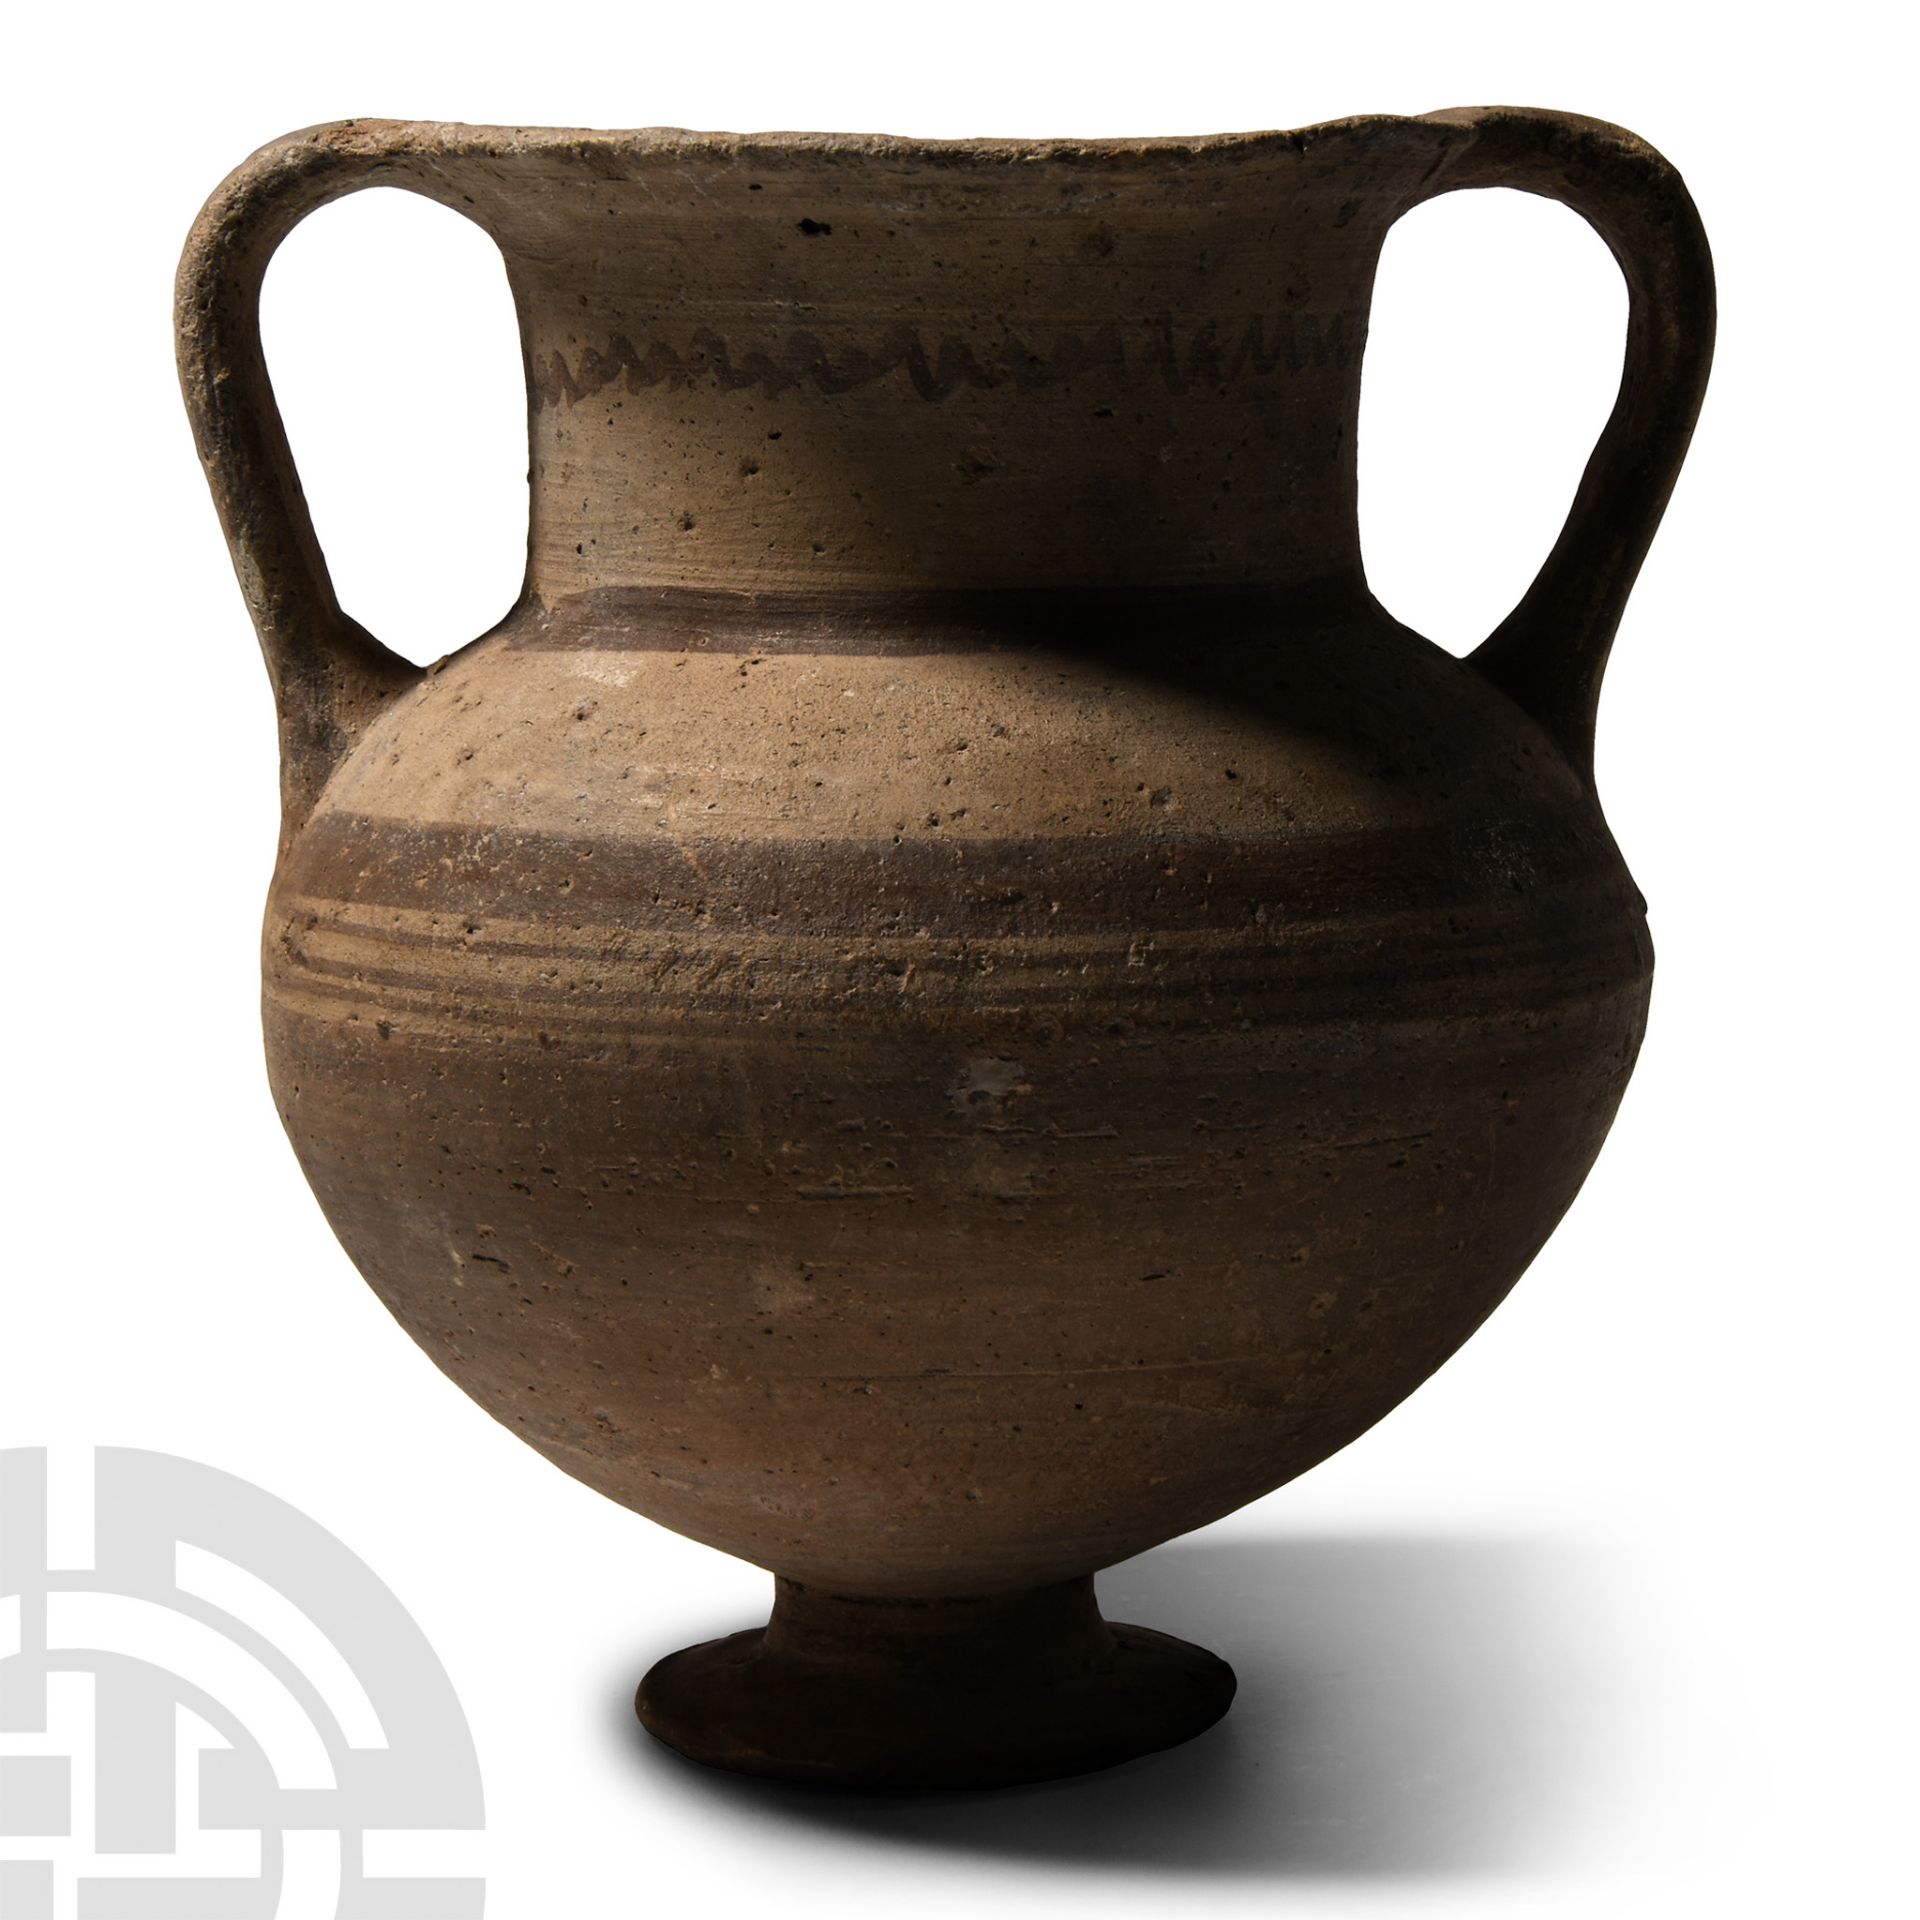 Cypriot Bichrome Ware Amphora